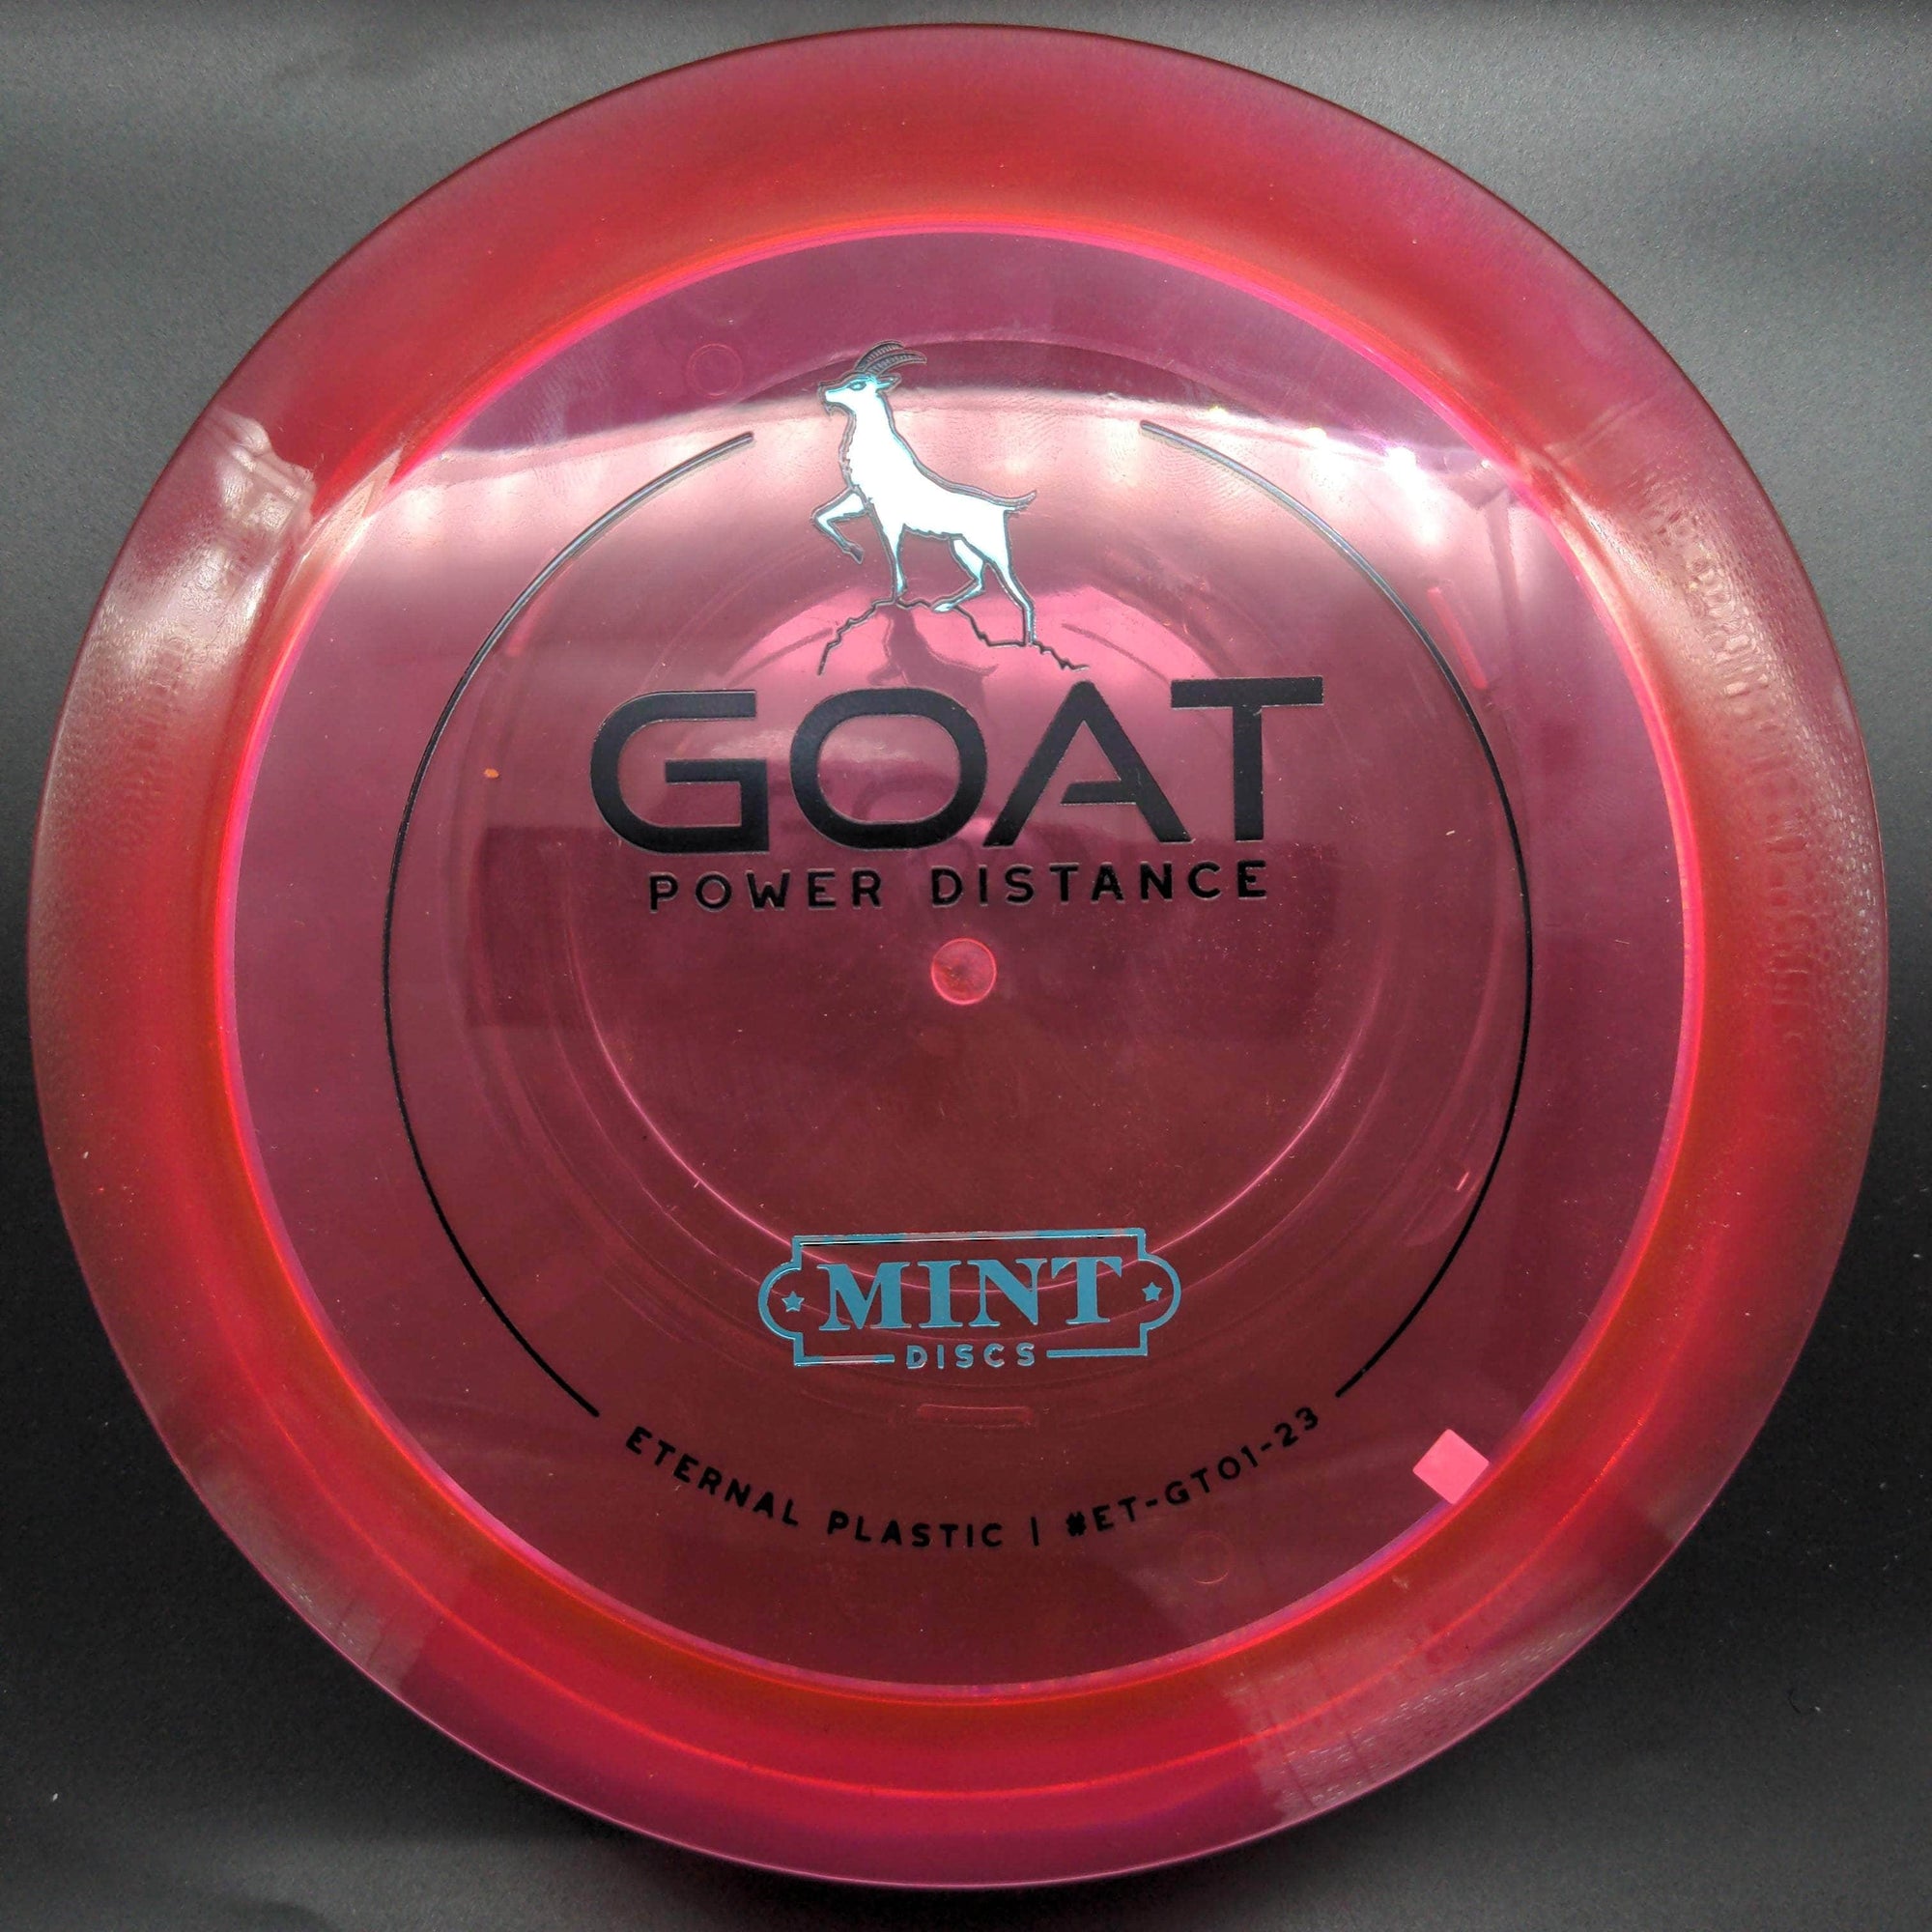 Mint Discs Distance Driver Pink/Red Black Blue Stamp 174g Goat - Eternal Plastic